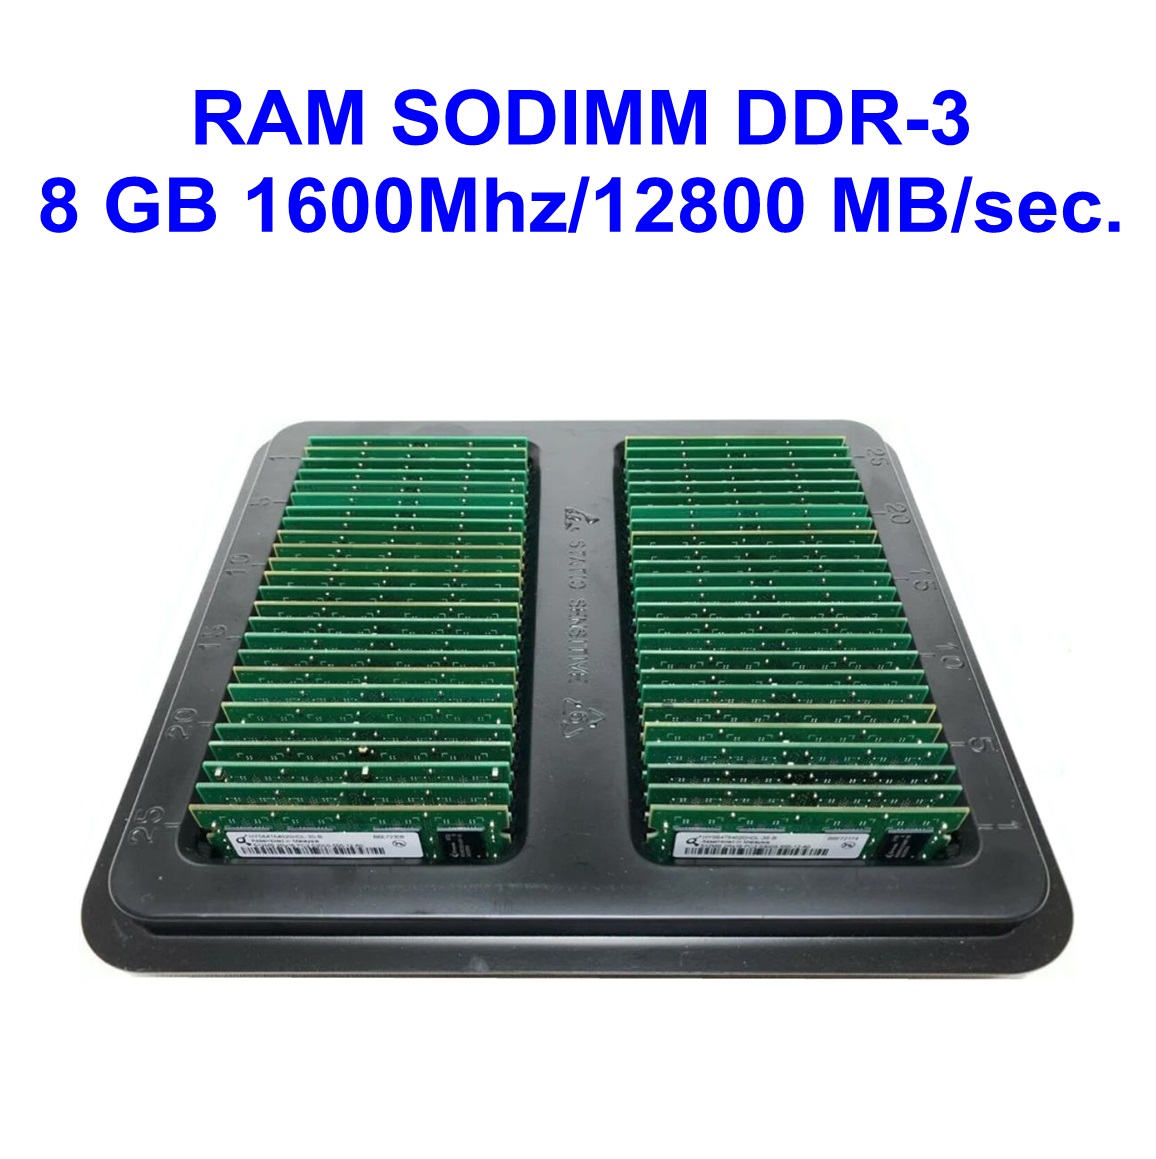 SODIMM DDR-3 8 GB 1600Mhz/12800 MB/sec.(1.50V)